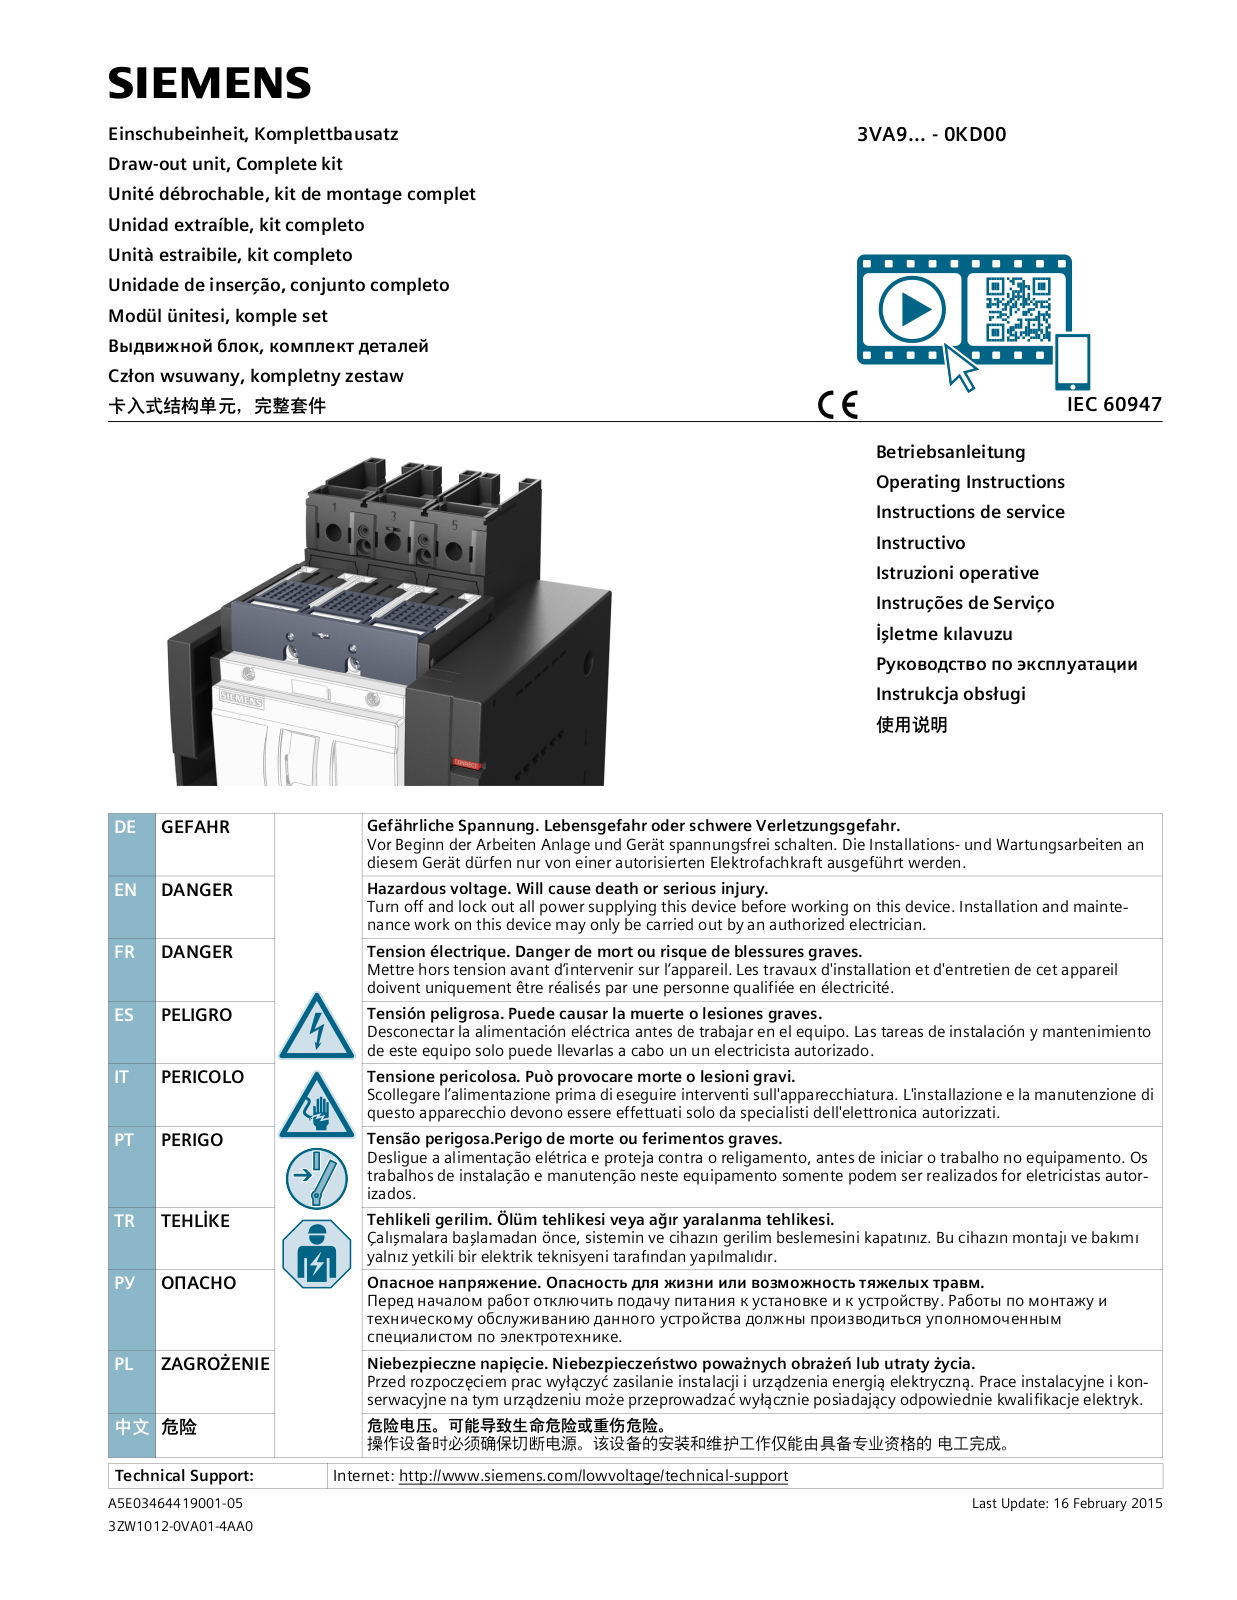 Siemens 3VA1 Series, 3VA2 Series, 3VA9213-0KD00, 3VA9214-0KD00, 3VA9123-0KD00 Operating Instructions Manual